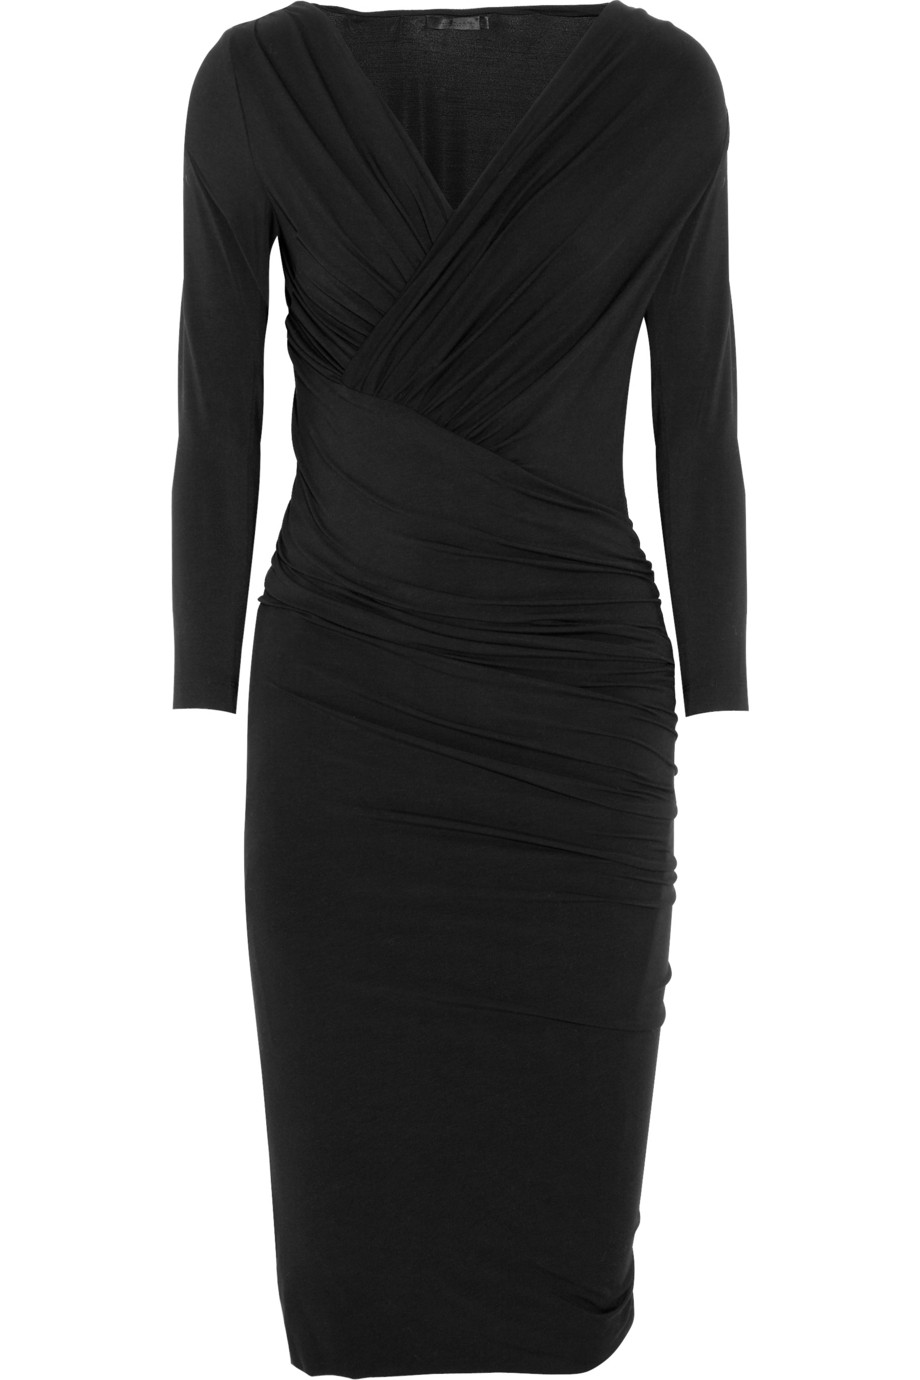 Lyst - Donna Karan Ruched Stretch-jersey Dress in Black